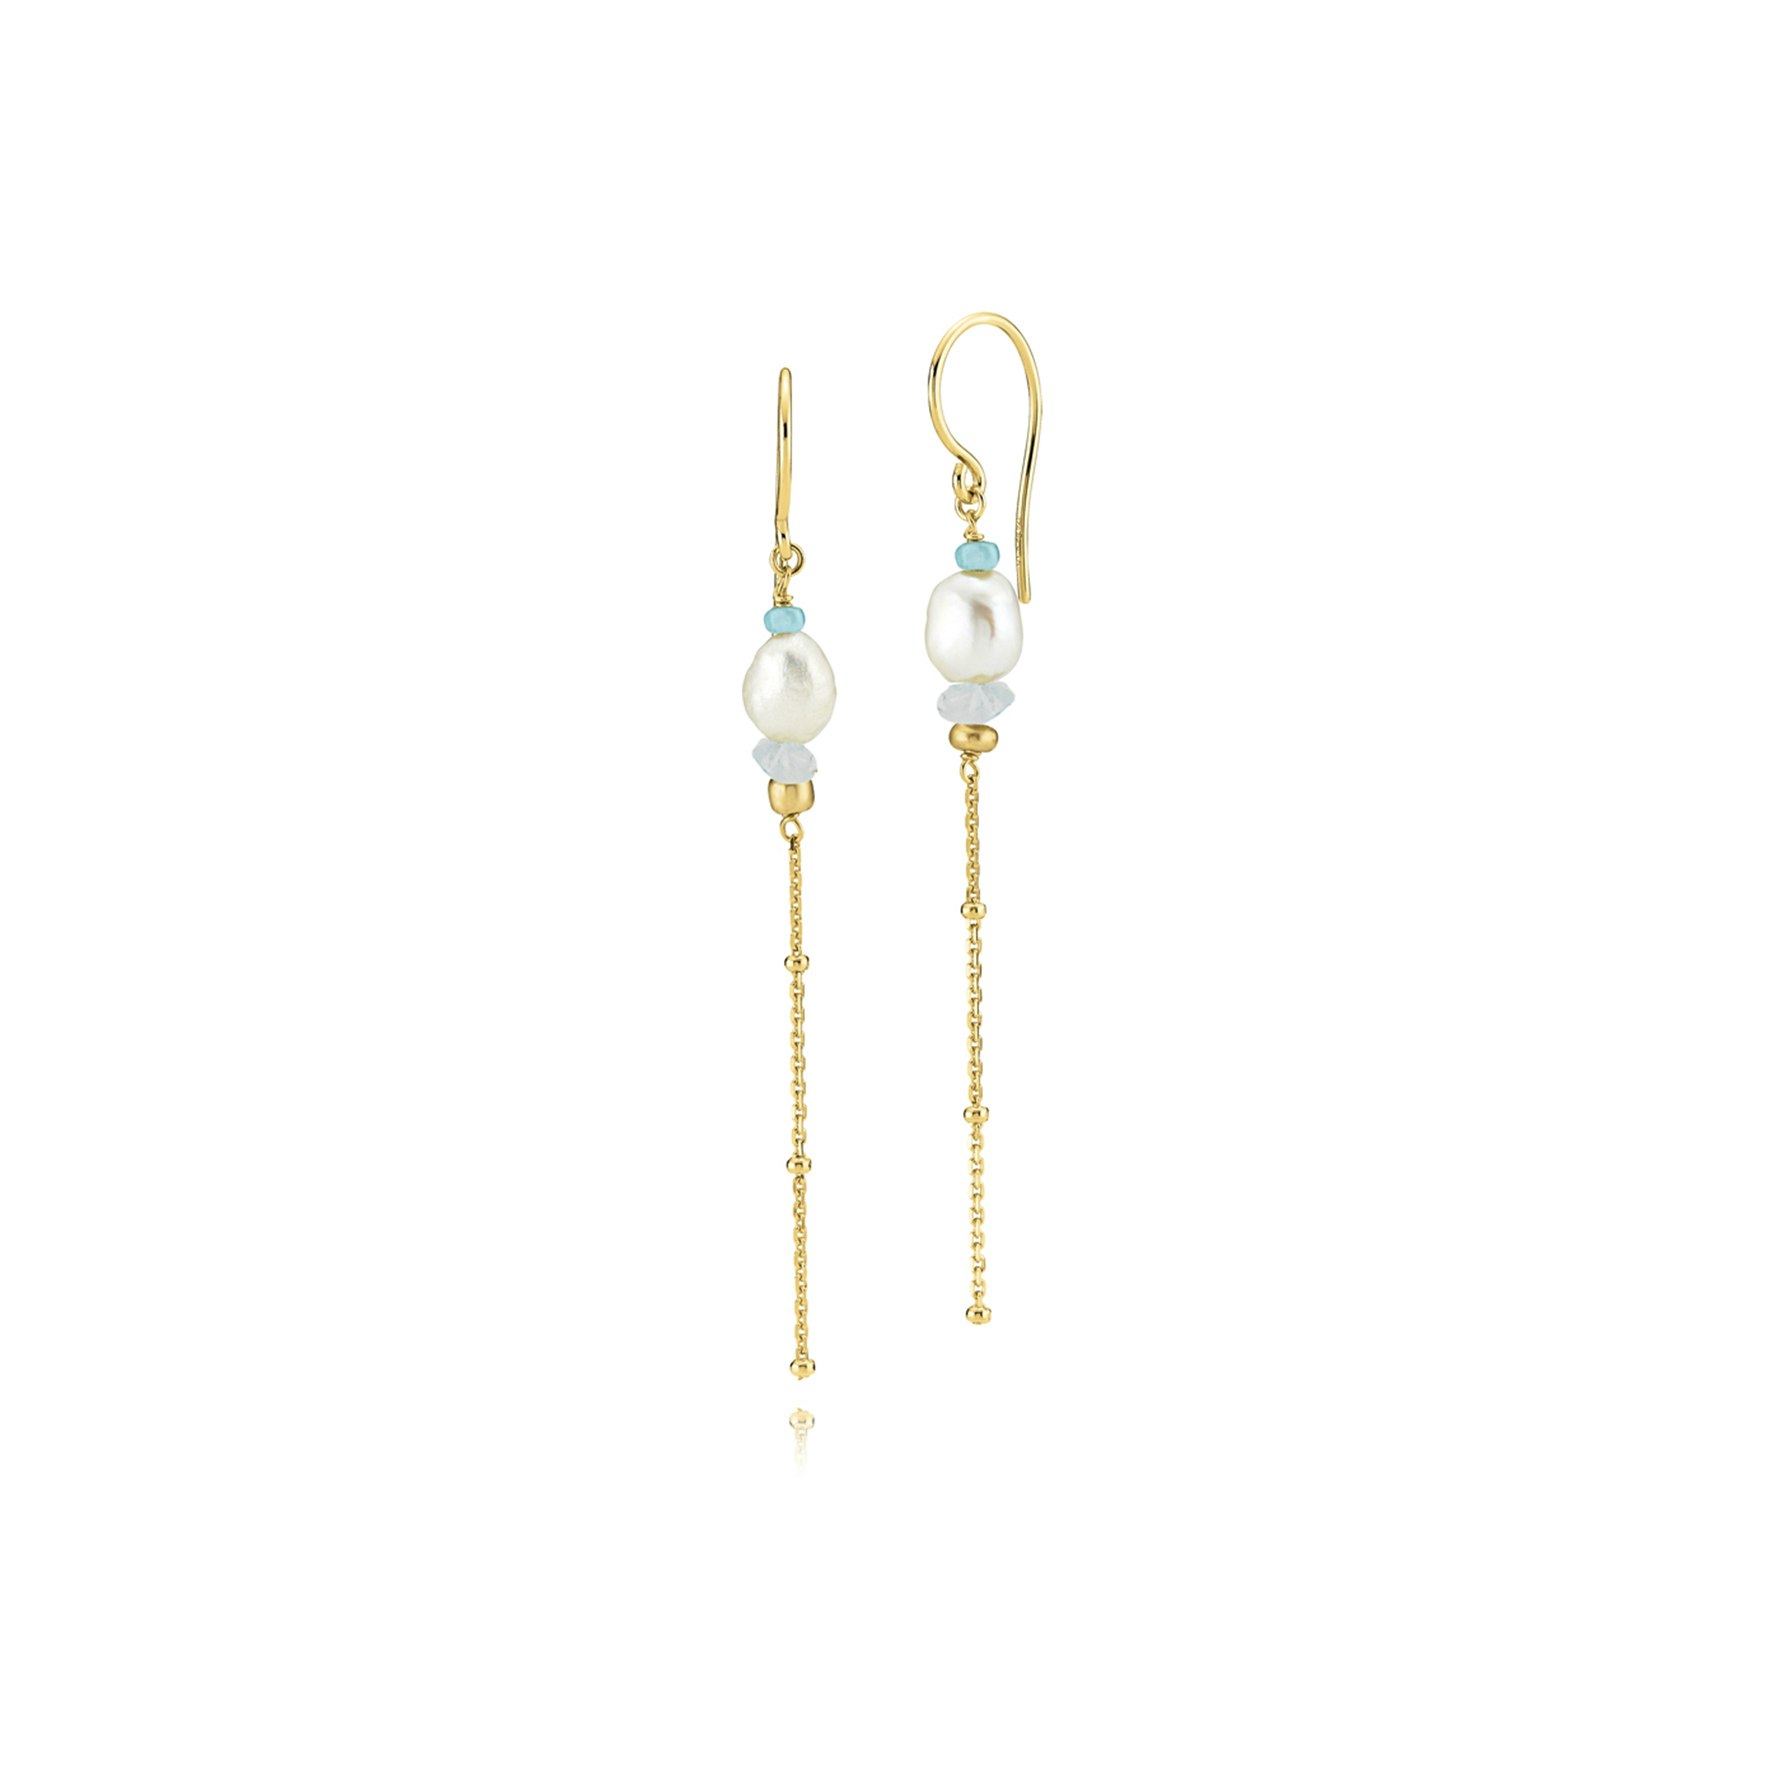 Beach Earrings Blue With Pearl von Sistie in Vergoldet-Silber Sterling 925